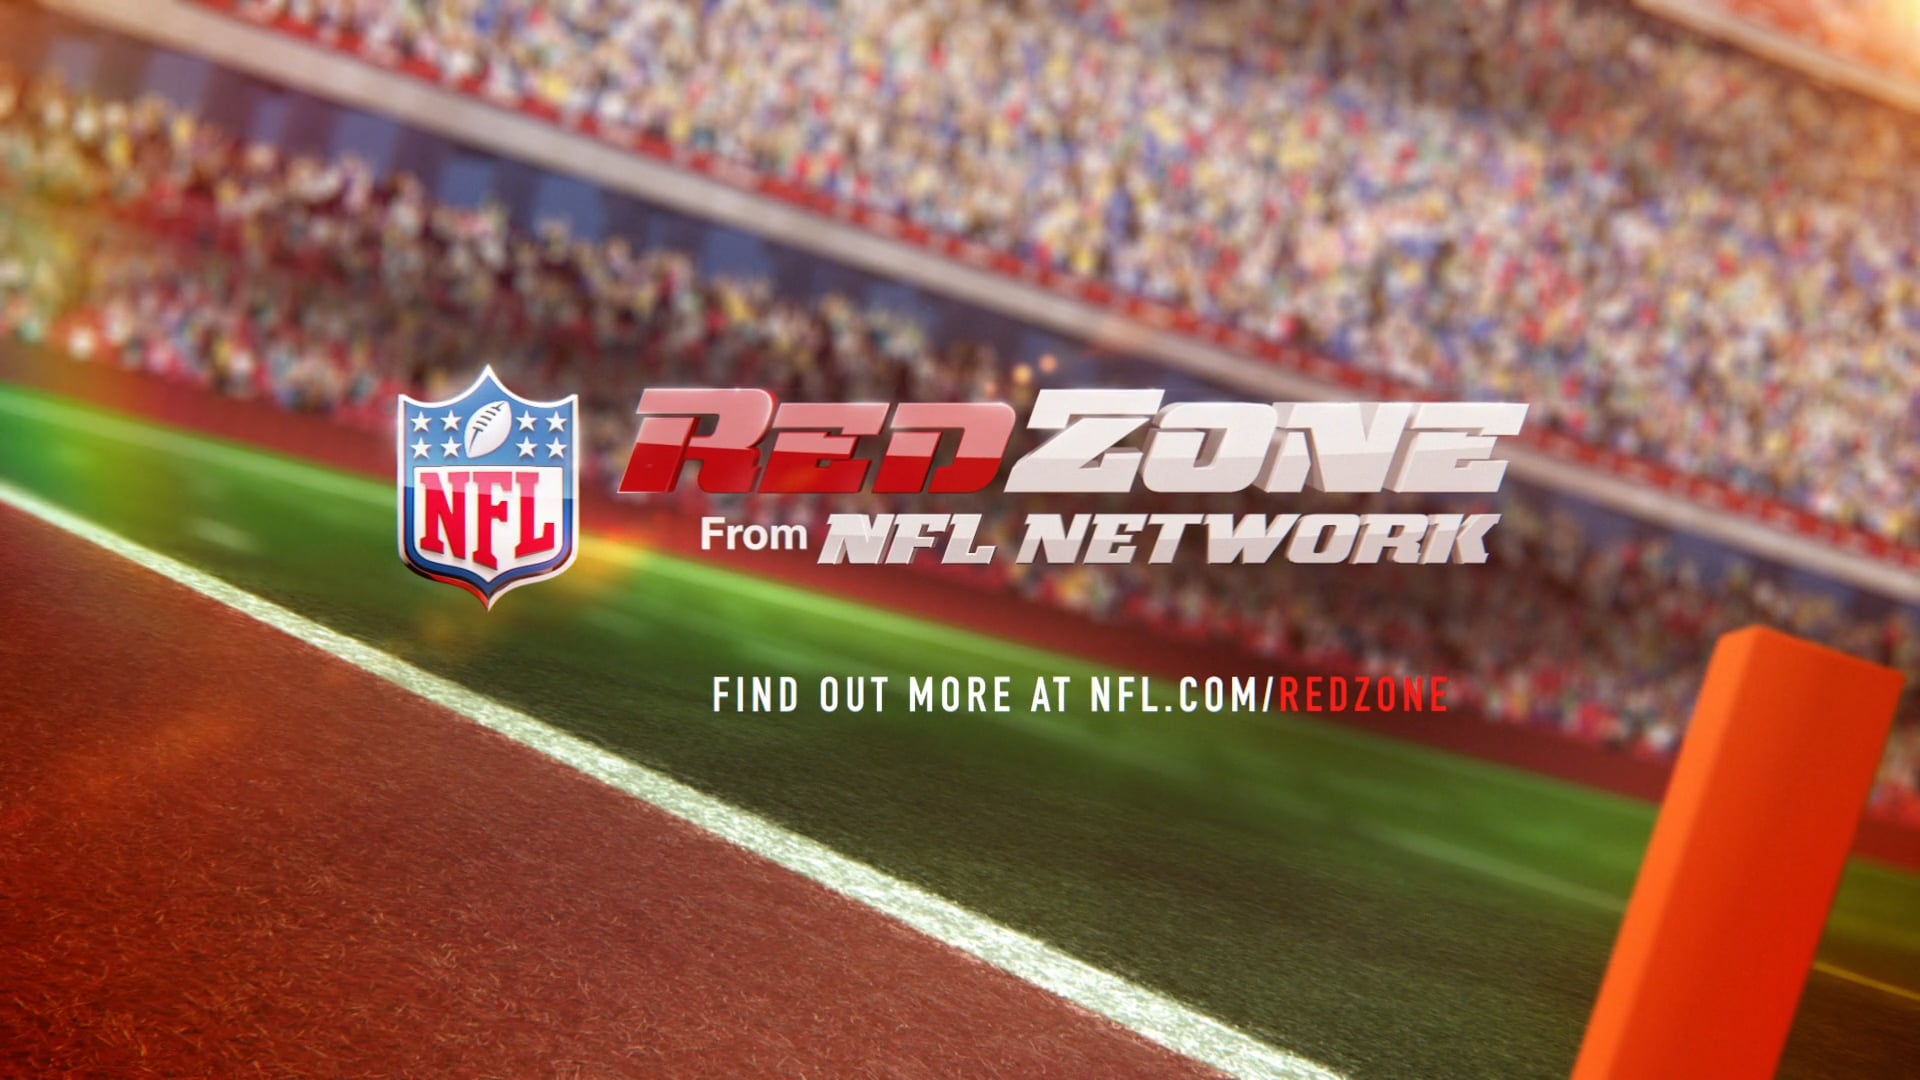 NFL RedZone on Vimeo